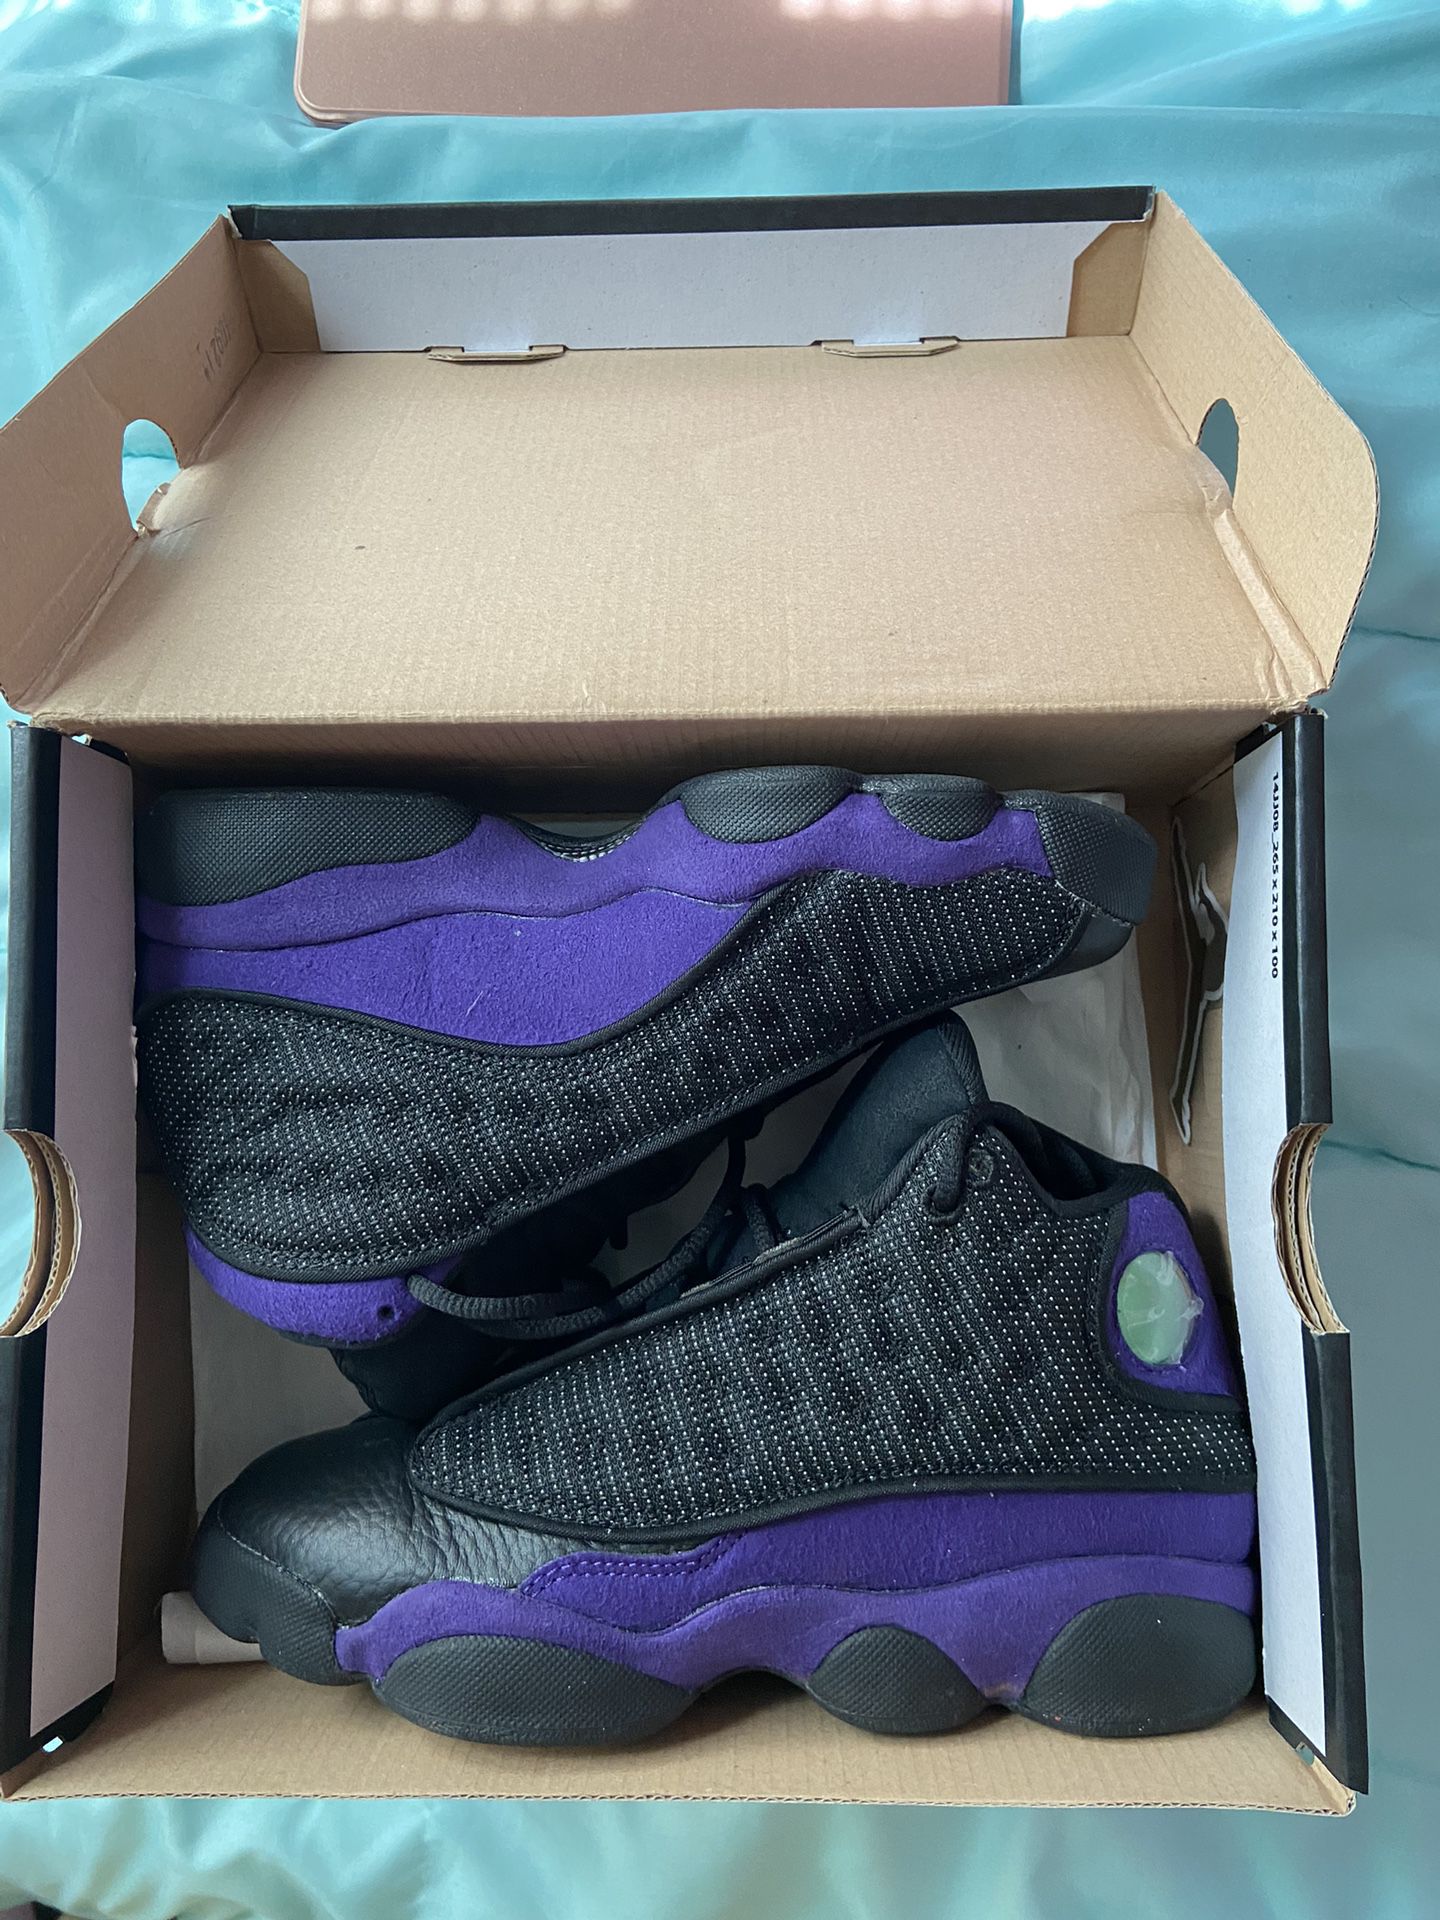 Jordan 13 “Court purple” 